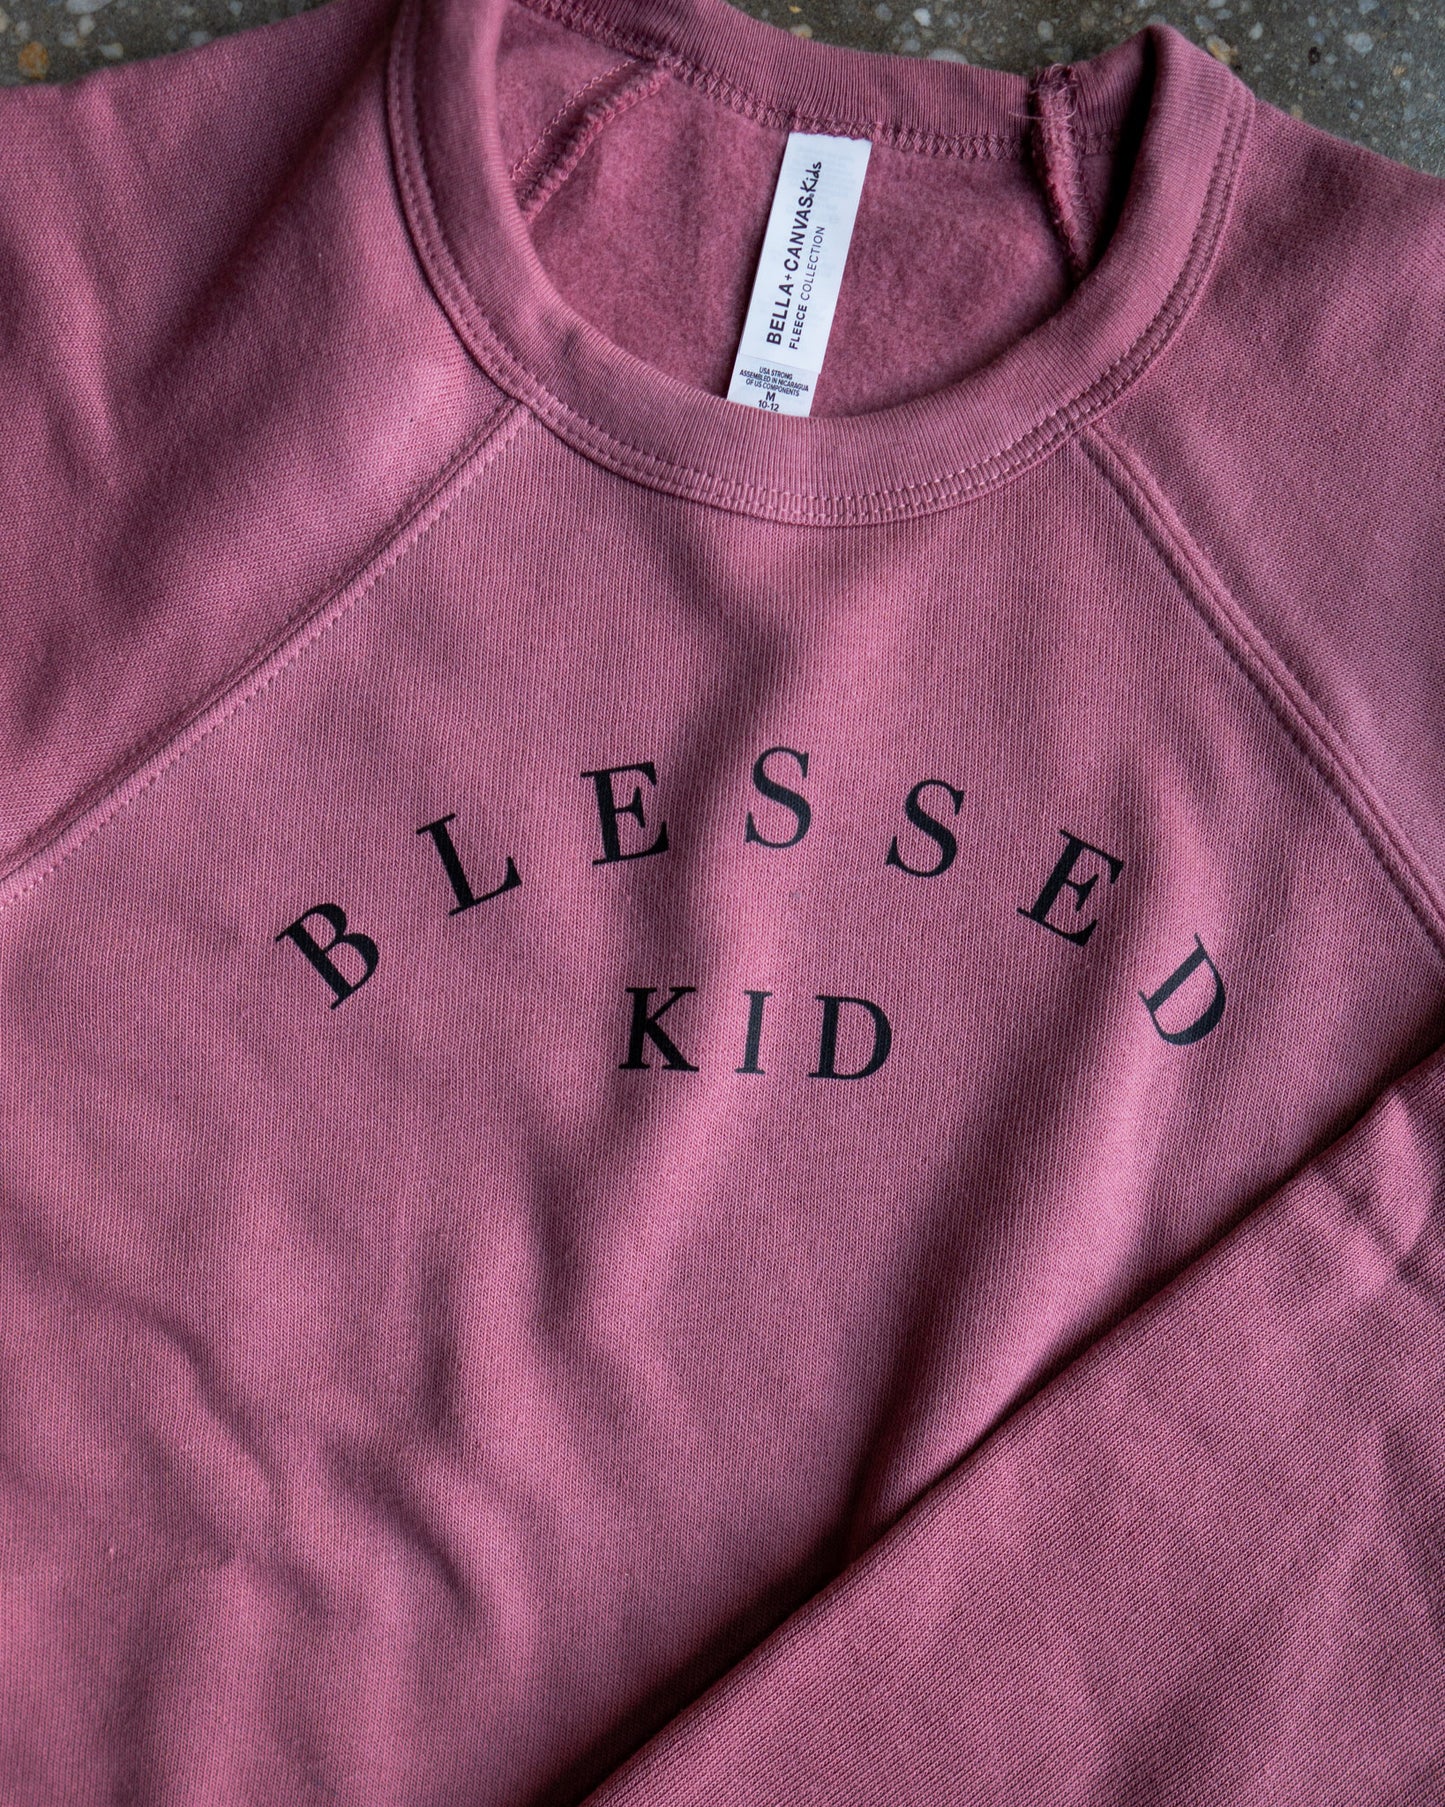 Blessed Kid Kids Sweatshirt